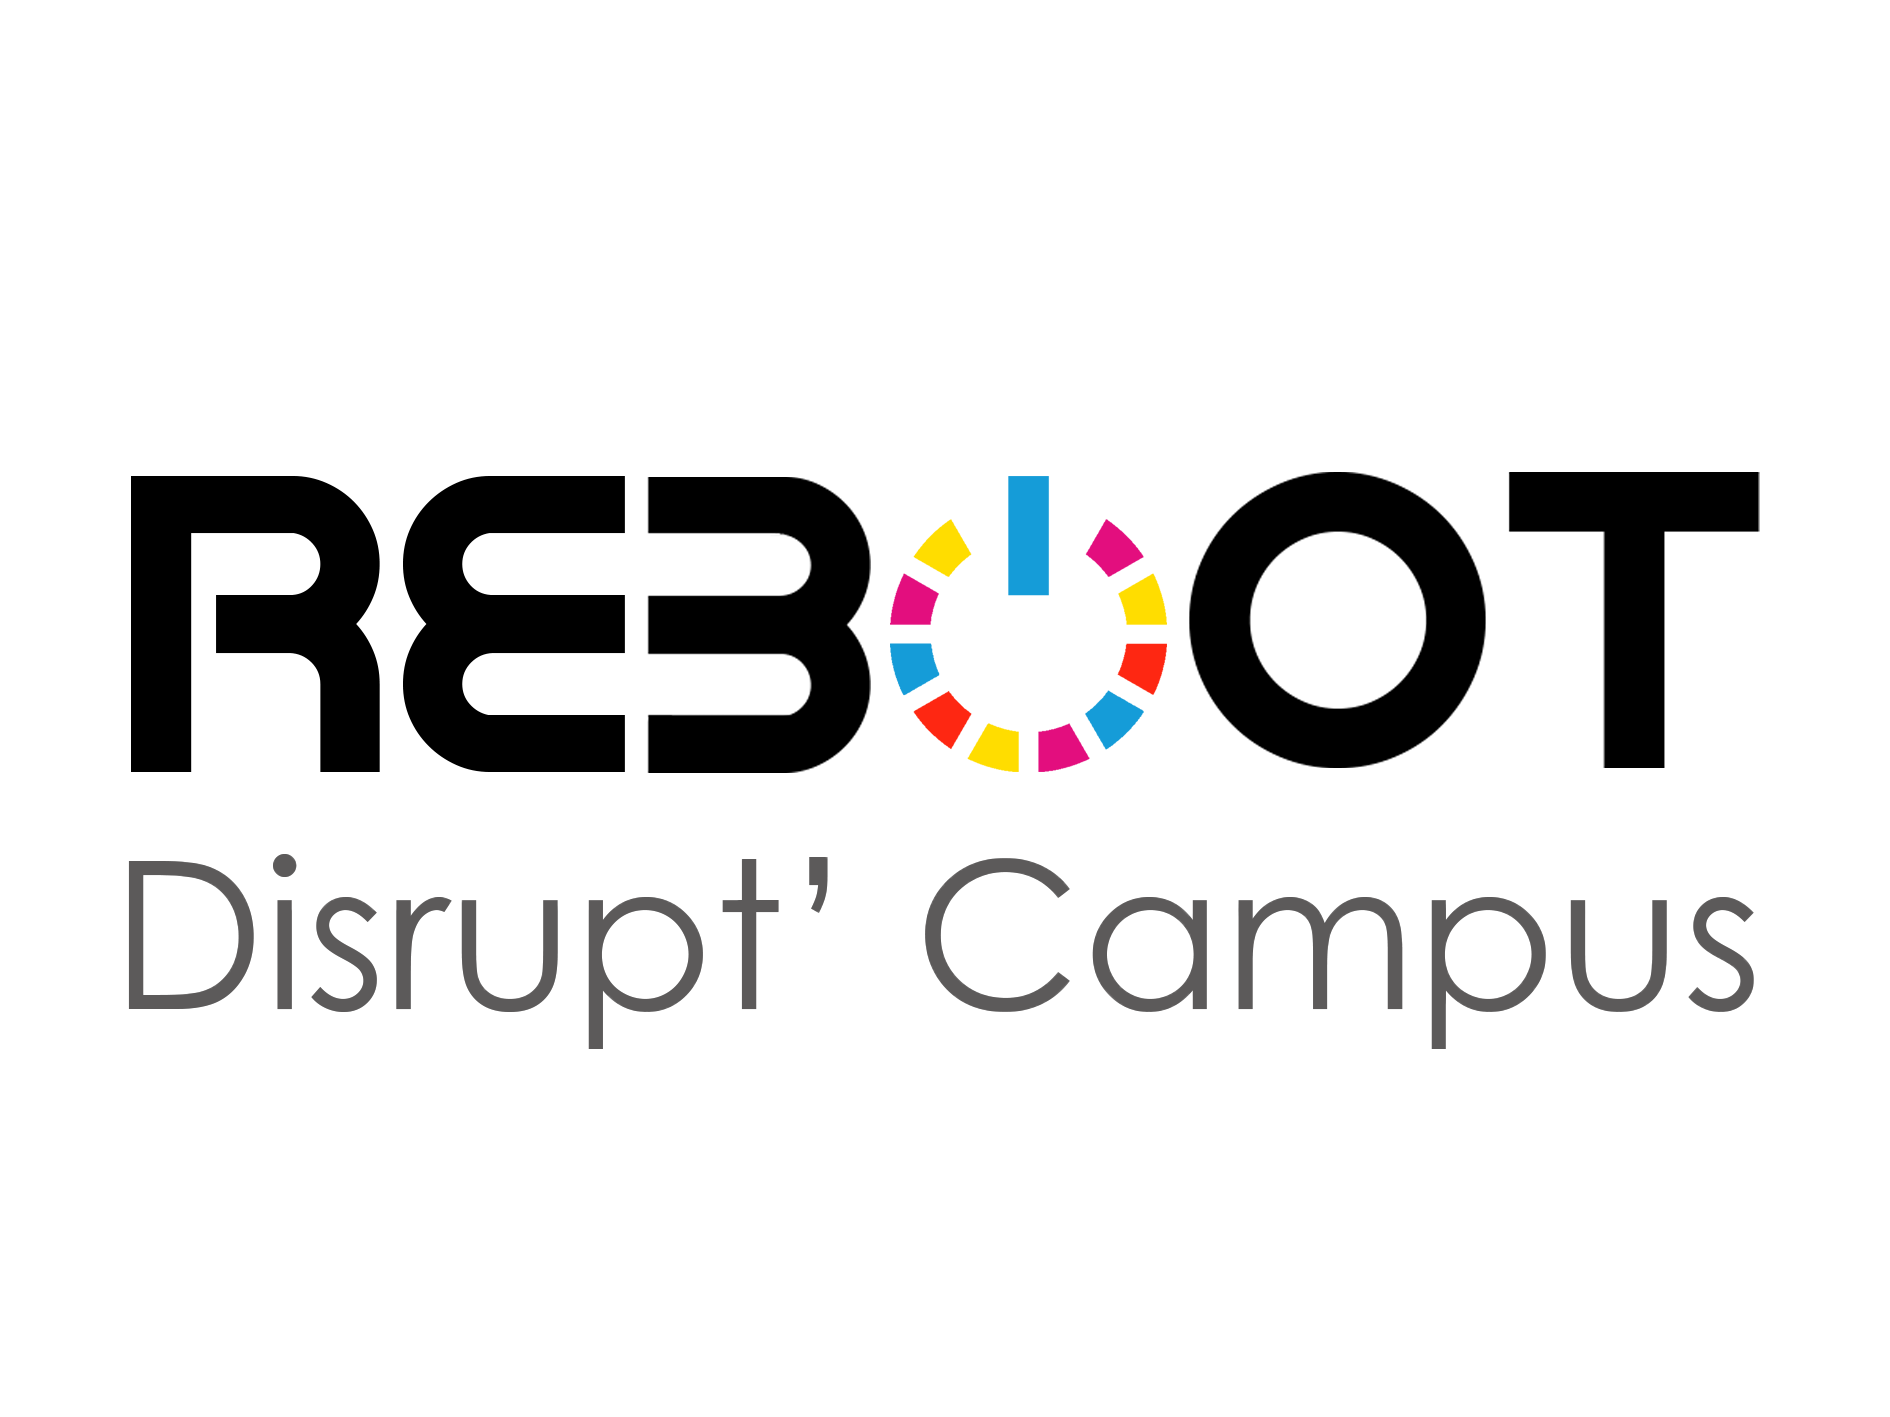 Reboot Disrupt Campus